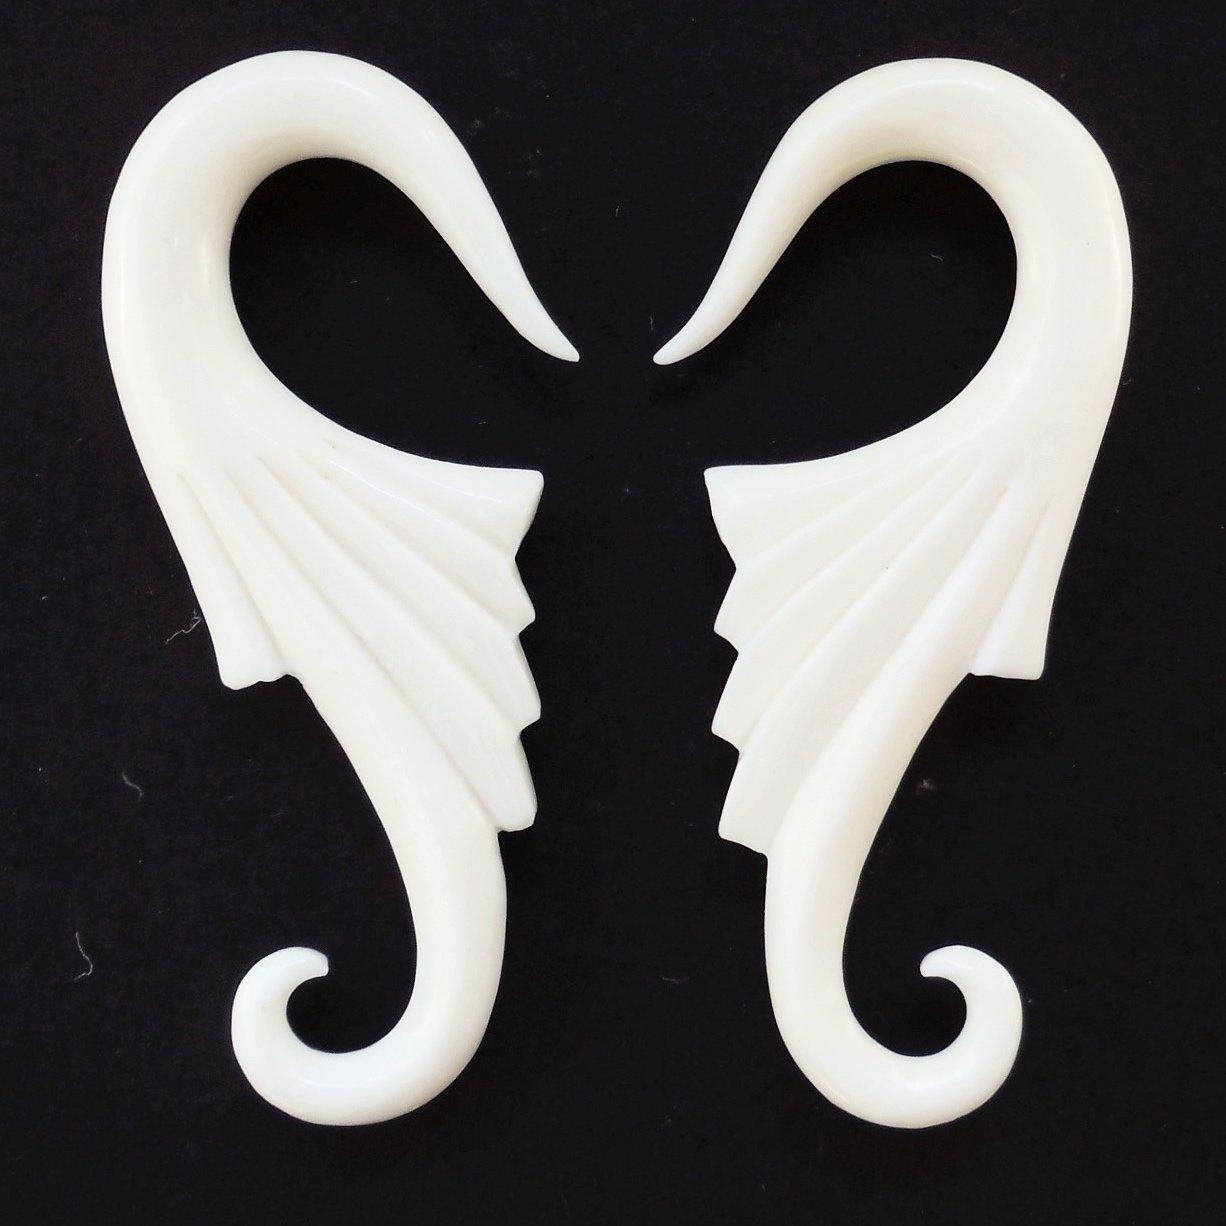 Gauges :|: Neuvo Wings. 2 gauge, bone. | Bone Body Jewelry